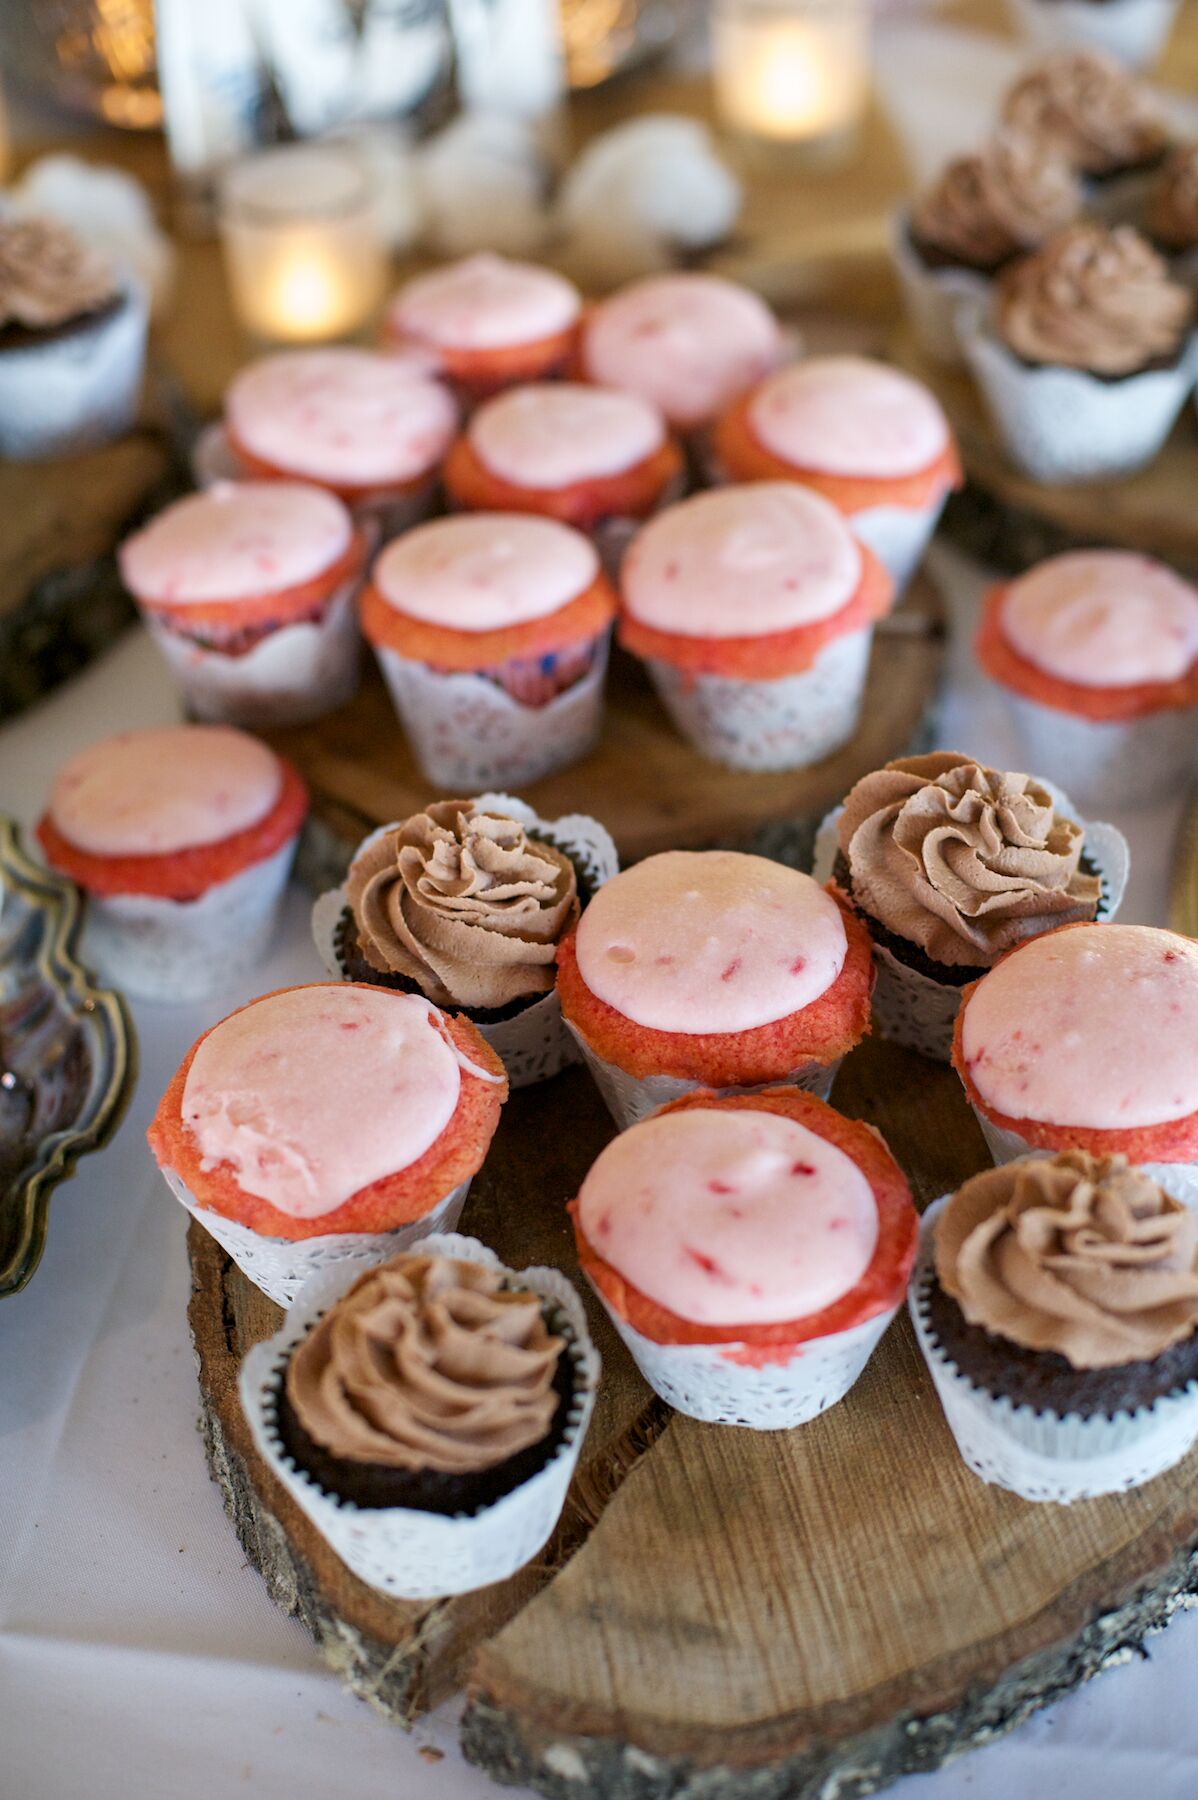 Assorted Cupcake Desserts